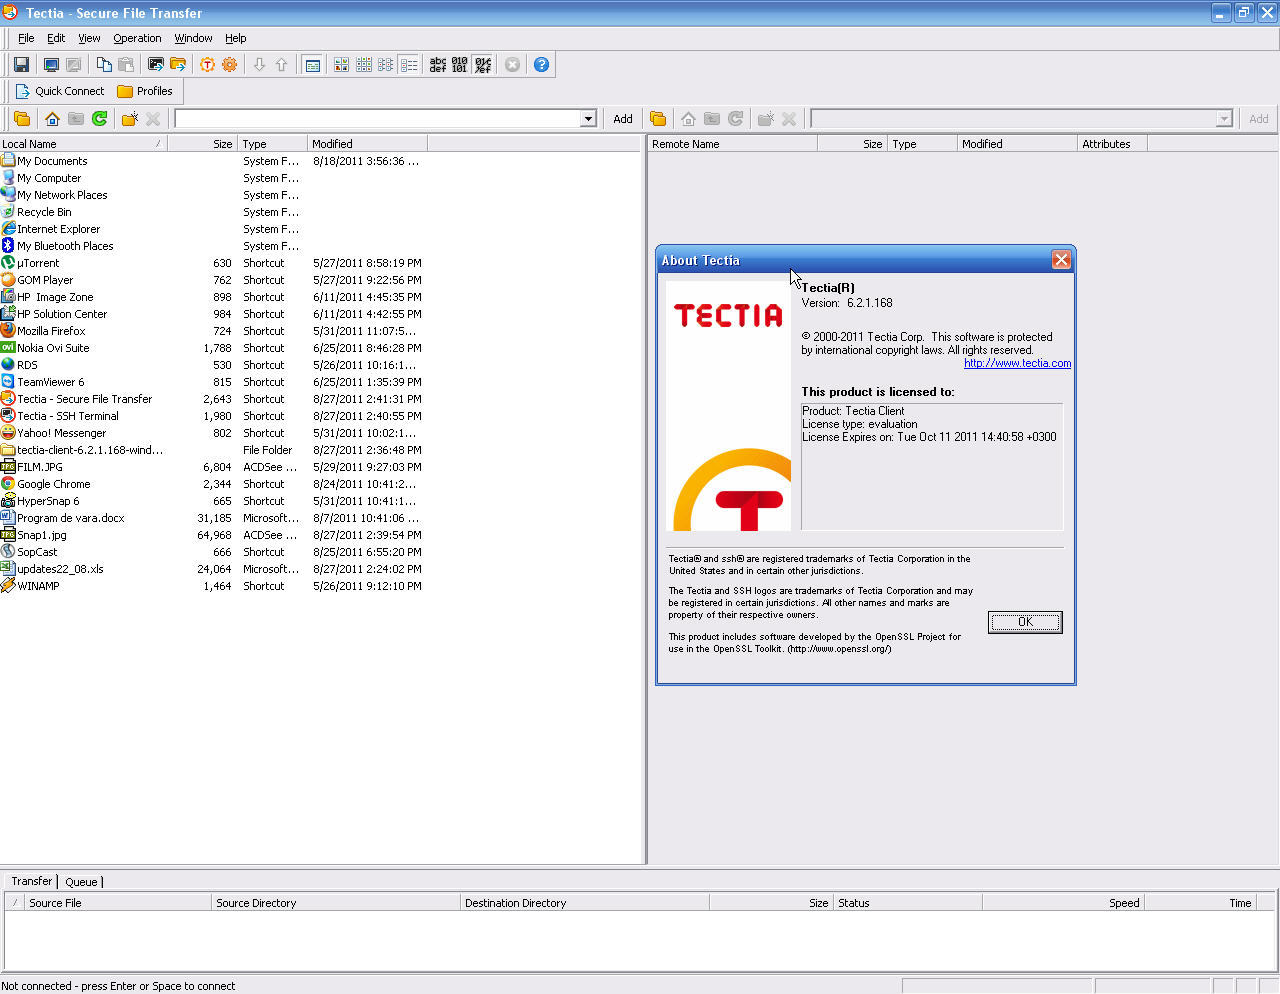 ssh tectia client 6.1 software